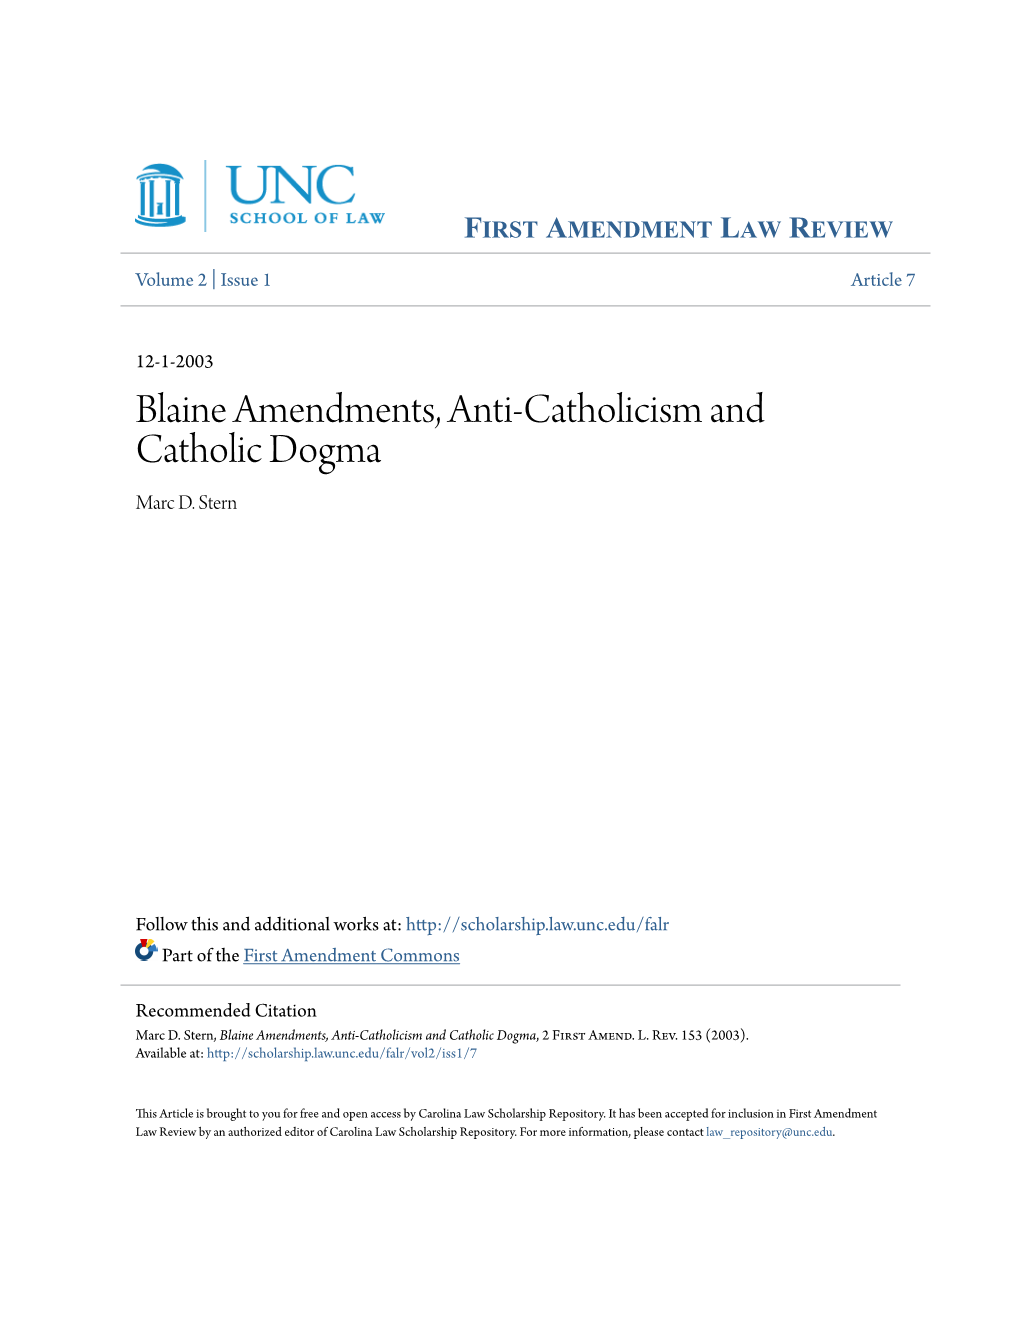 Blaine Amendments, Anti-Catholicism and Catholic Dogma Marc D